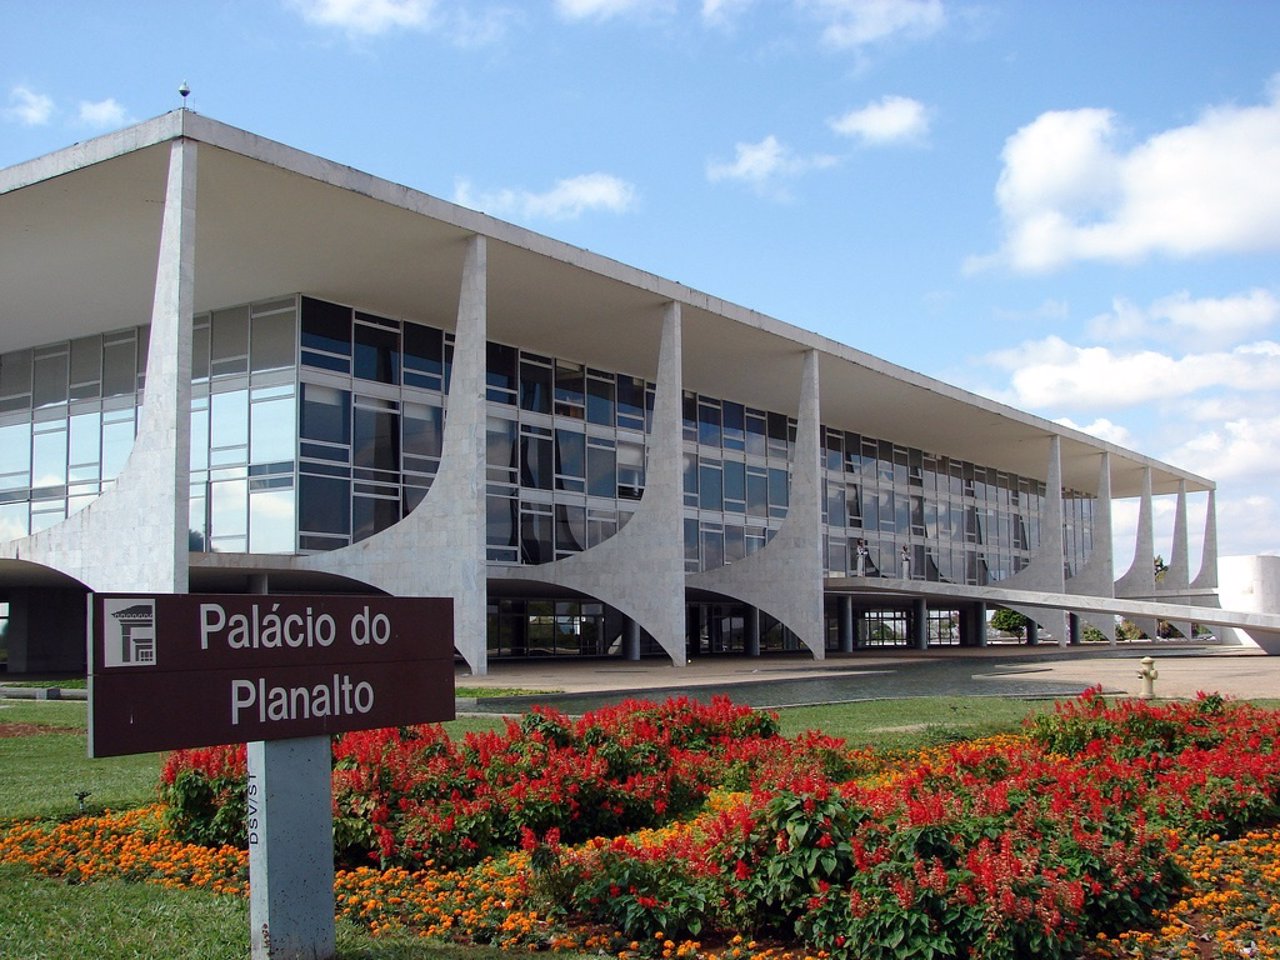 Palacio de Planalto en Brasil